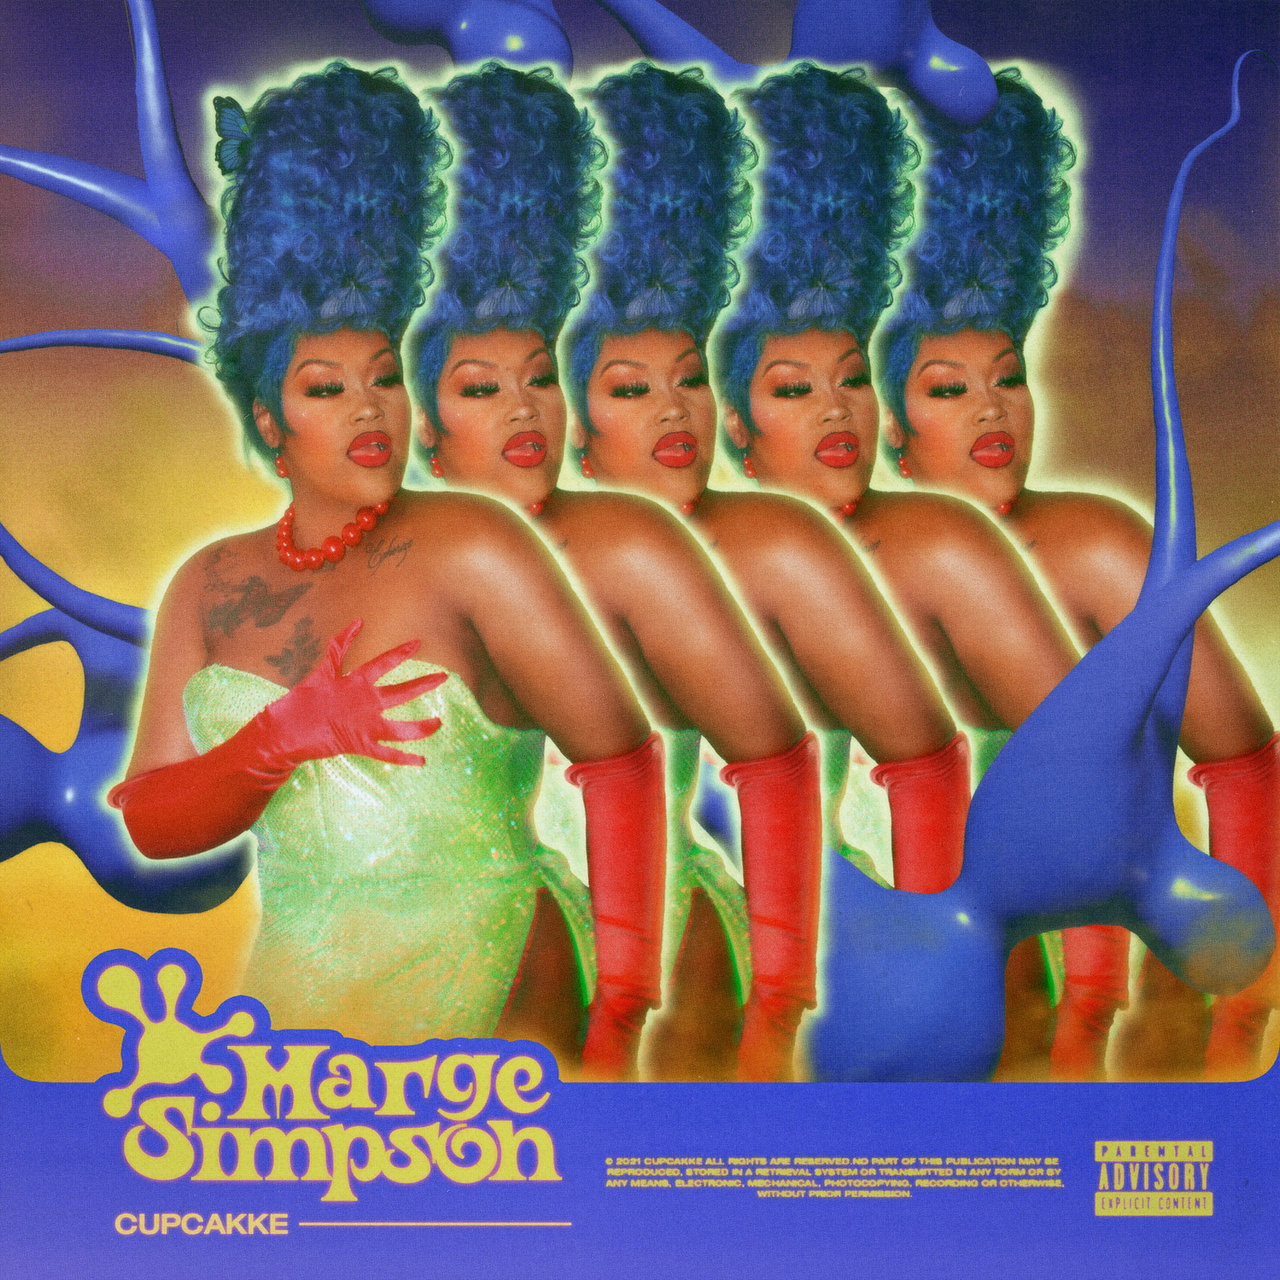 CupcakKe — Marge Simpson cover artwork